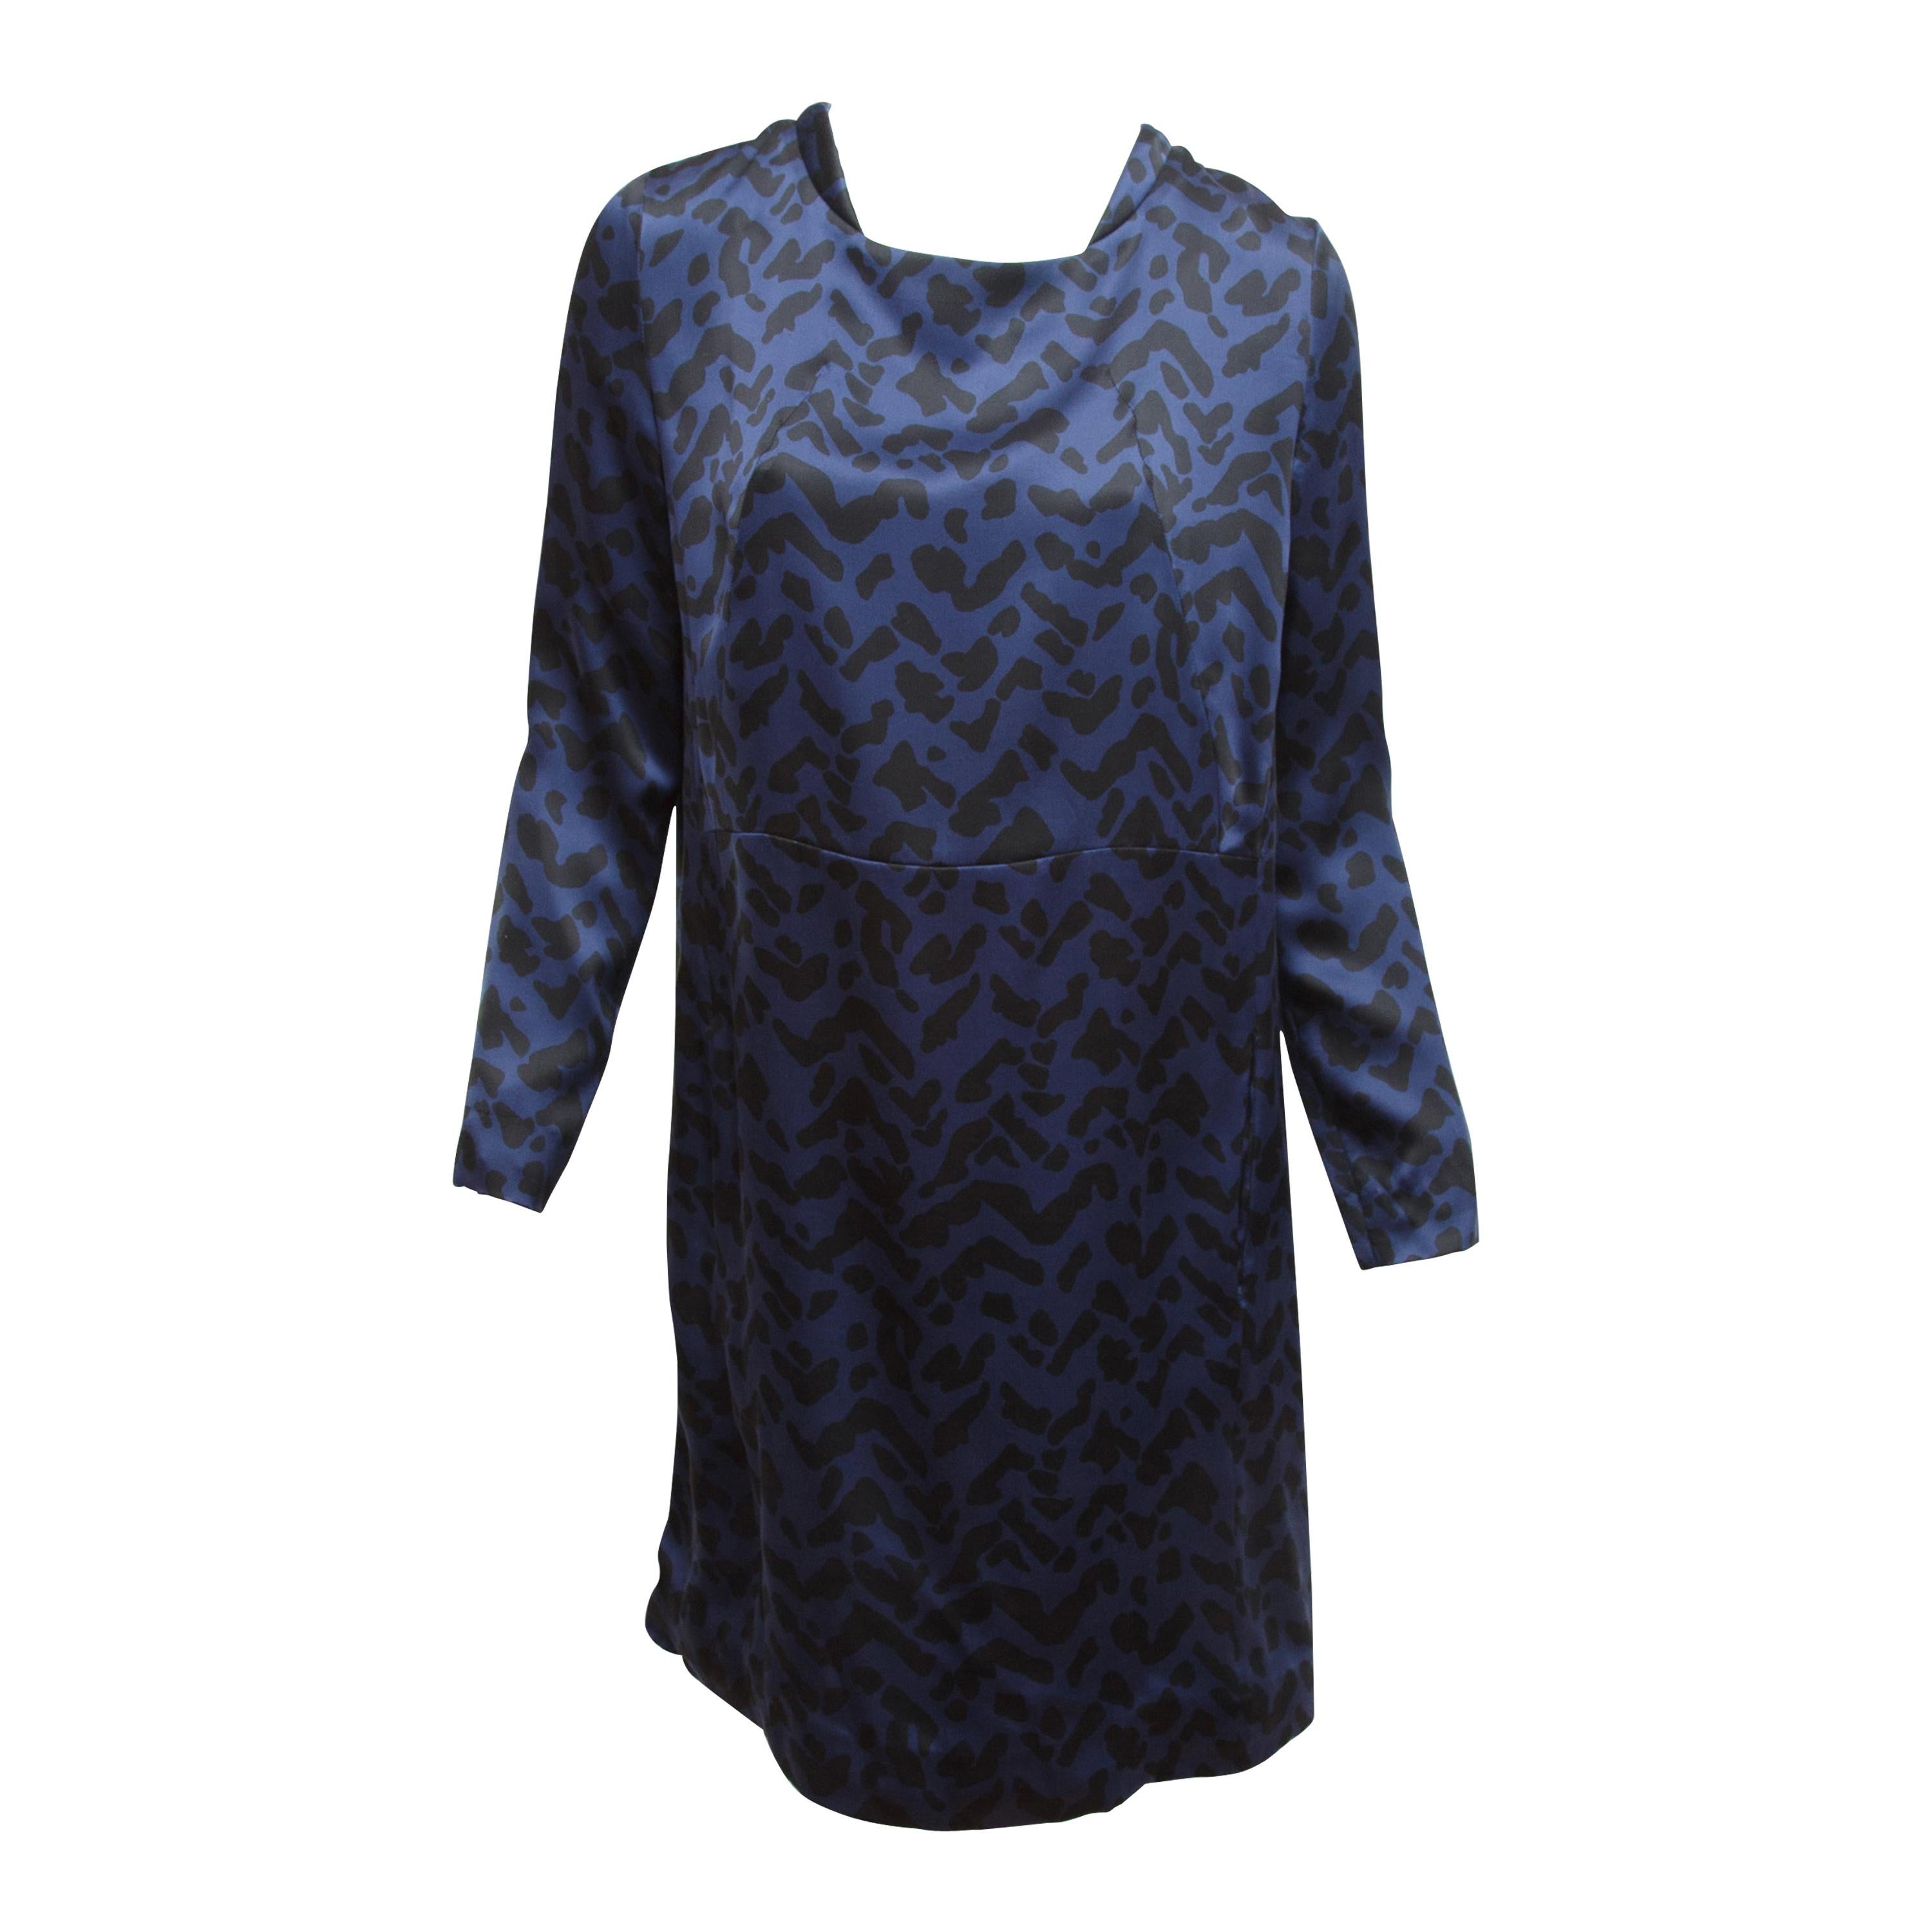 Chloe Navy Blue & Black Printed Silk Shift Dress